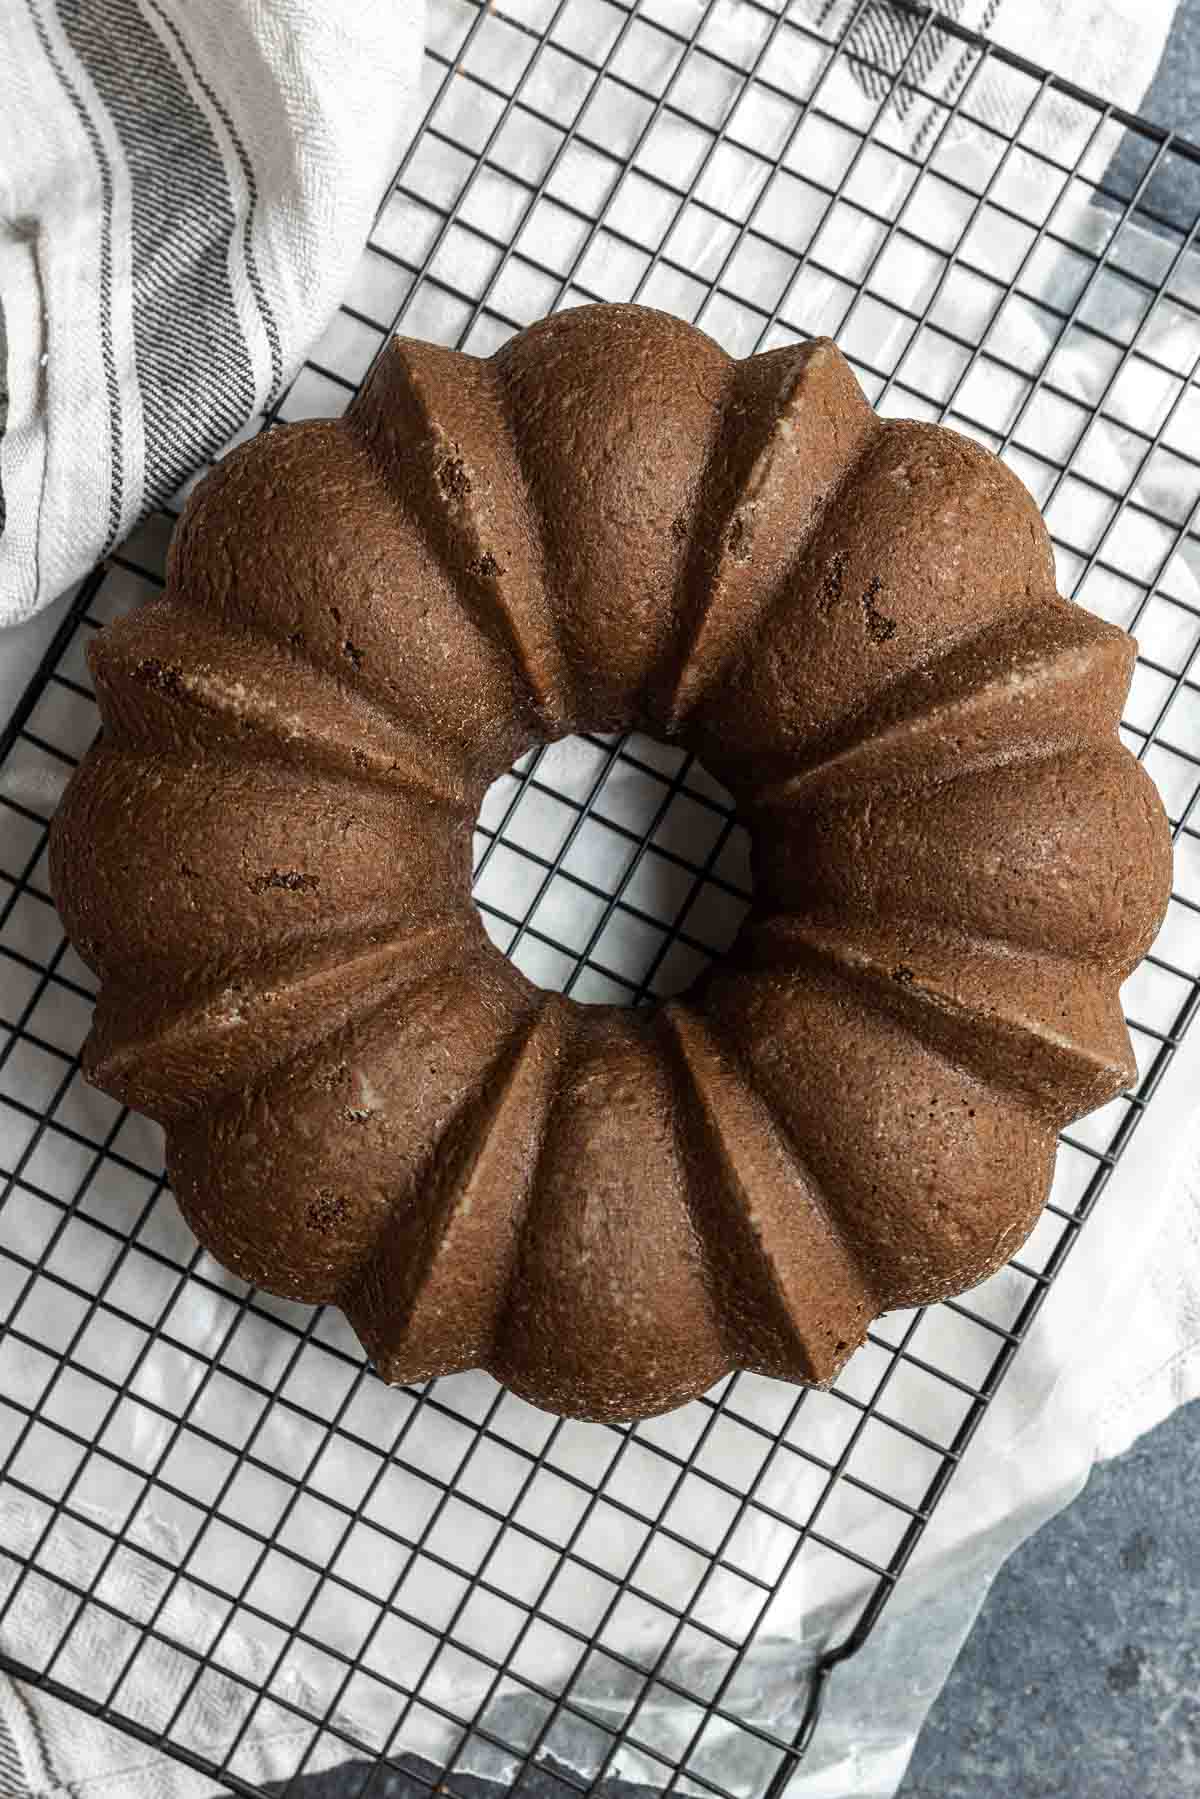 Chocolate Fudge Cake without glaze on cooling rack